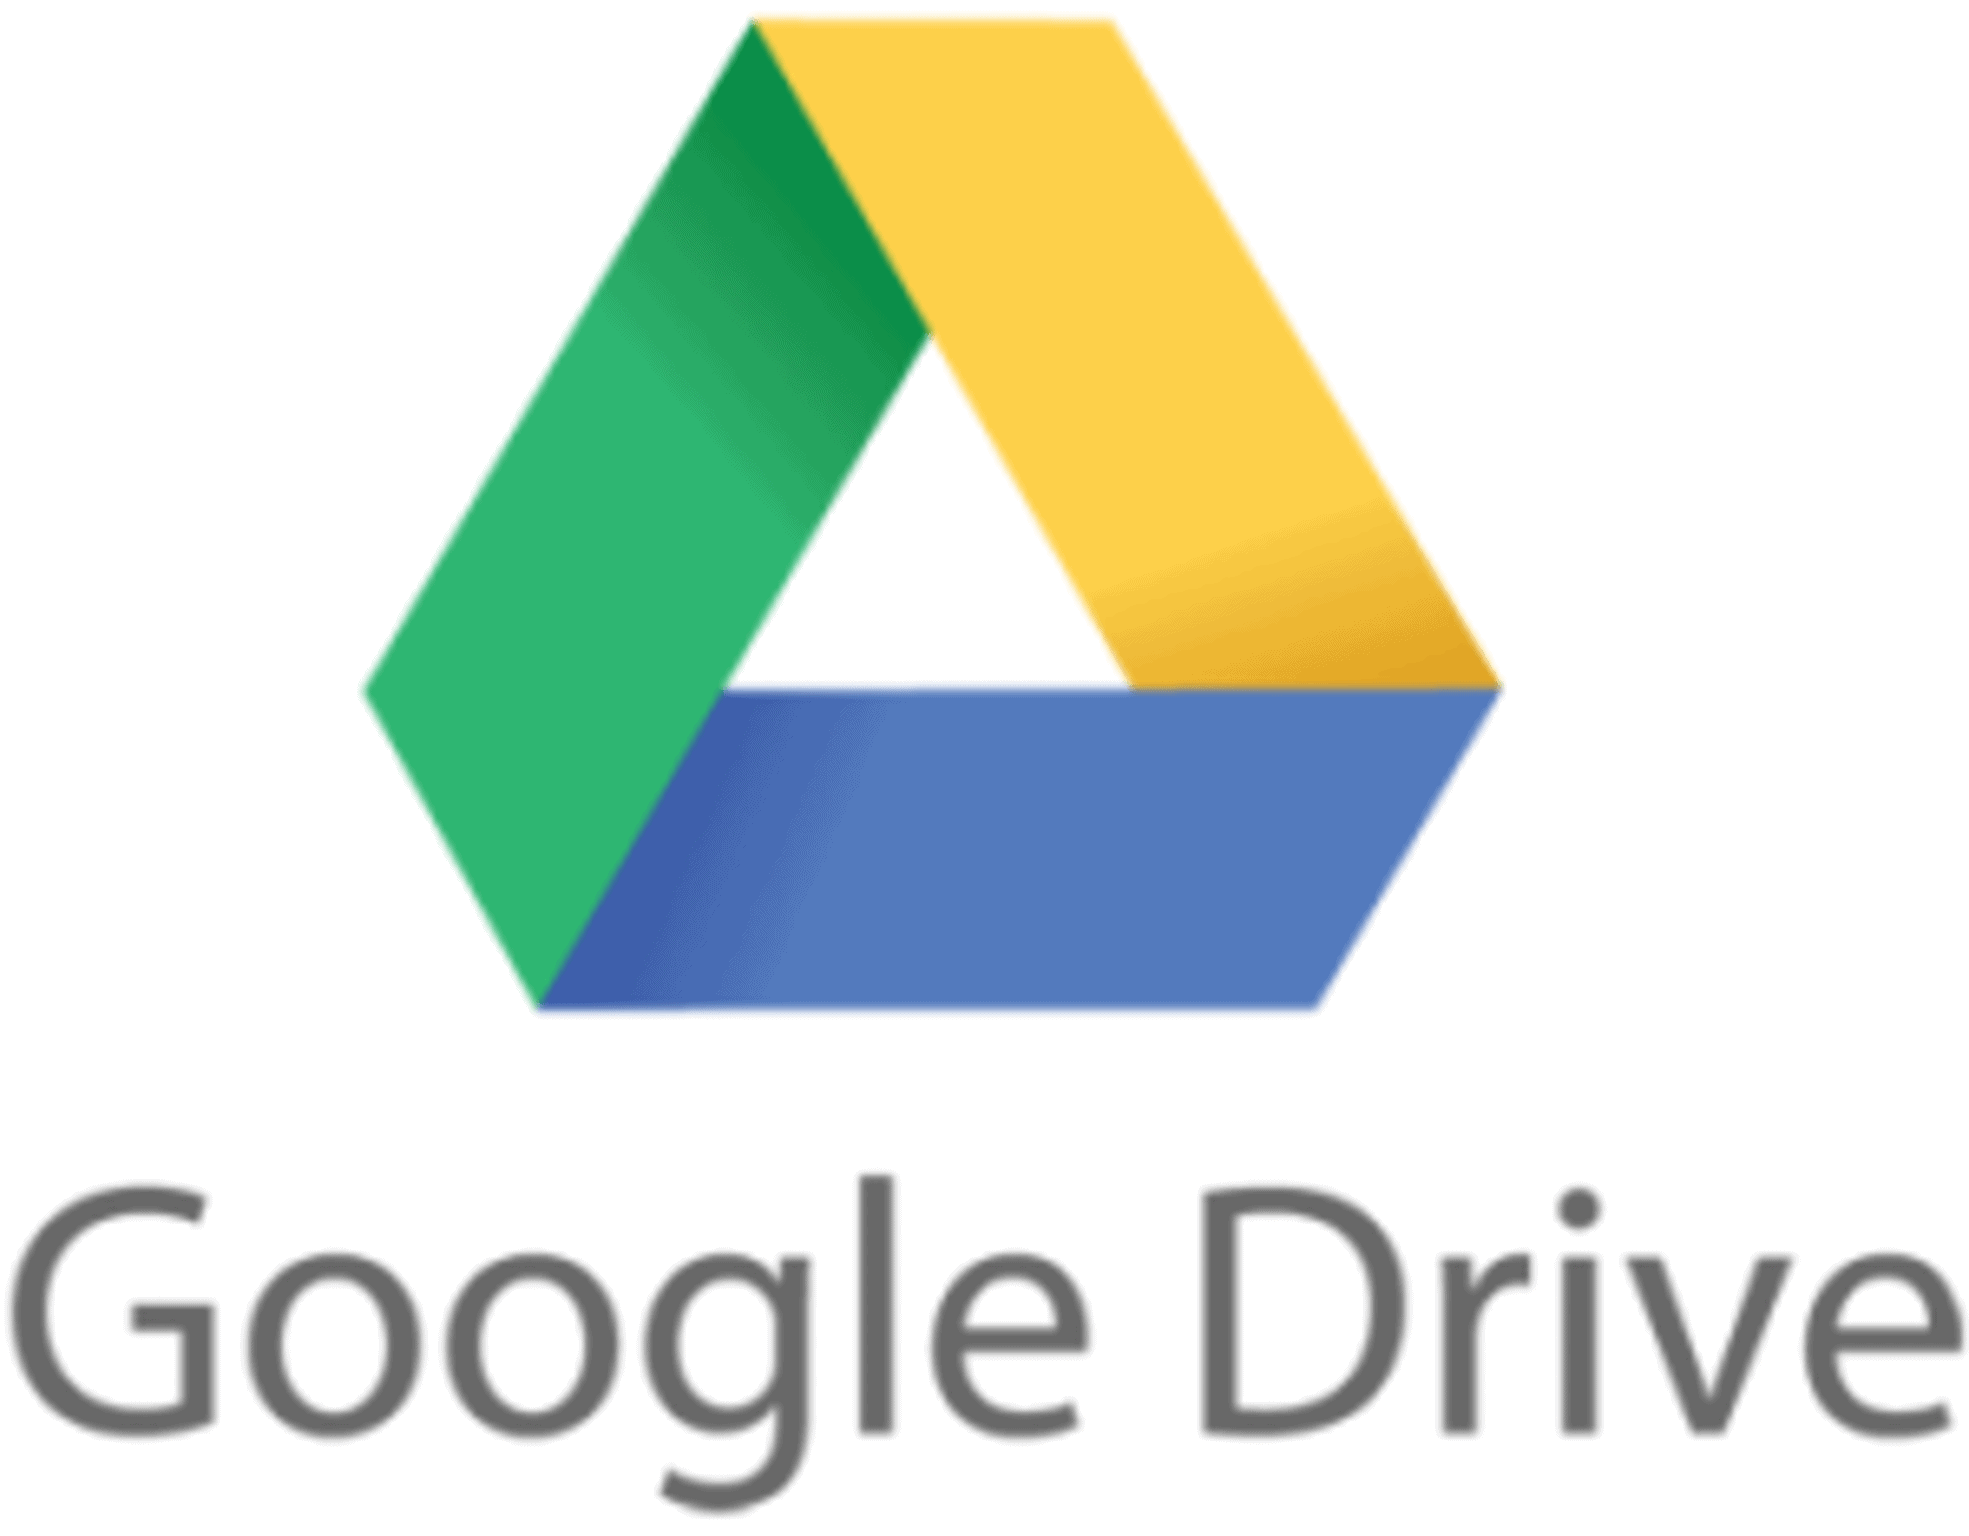 latest version of google drive